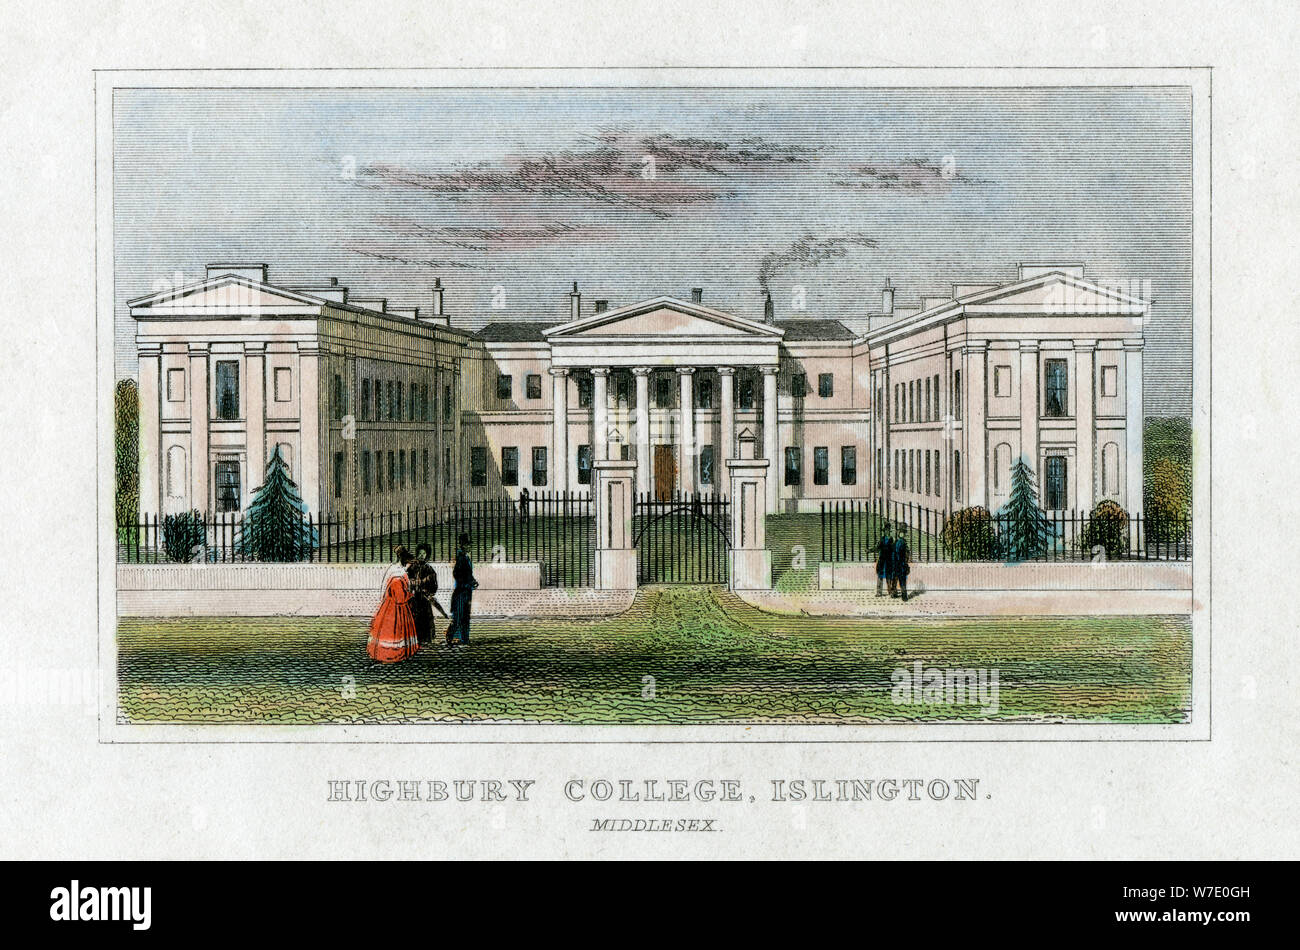 Highbury College, Islington, London, mid 19th century. Artist: Unknown Stock Photo